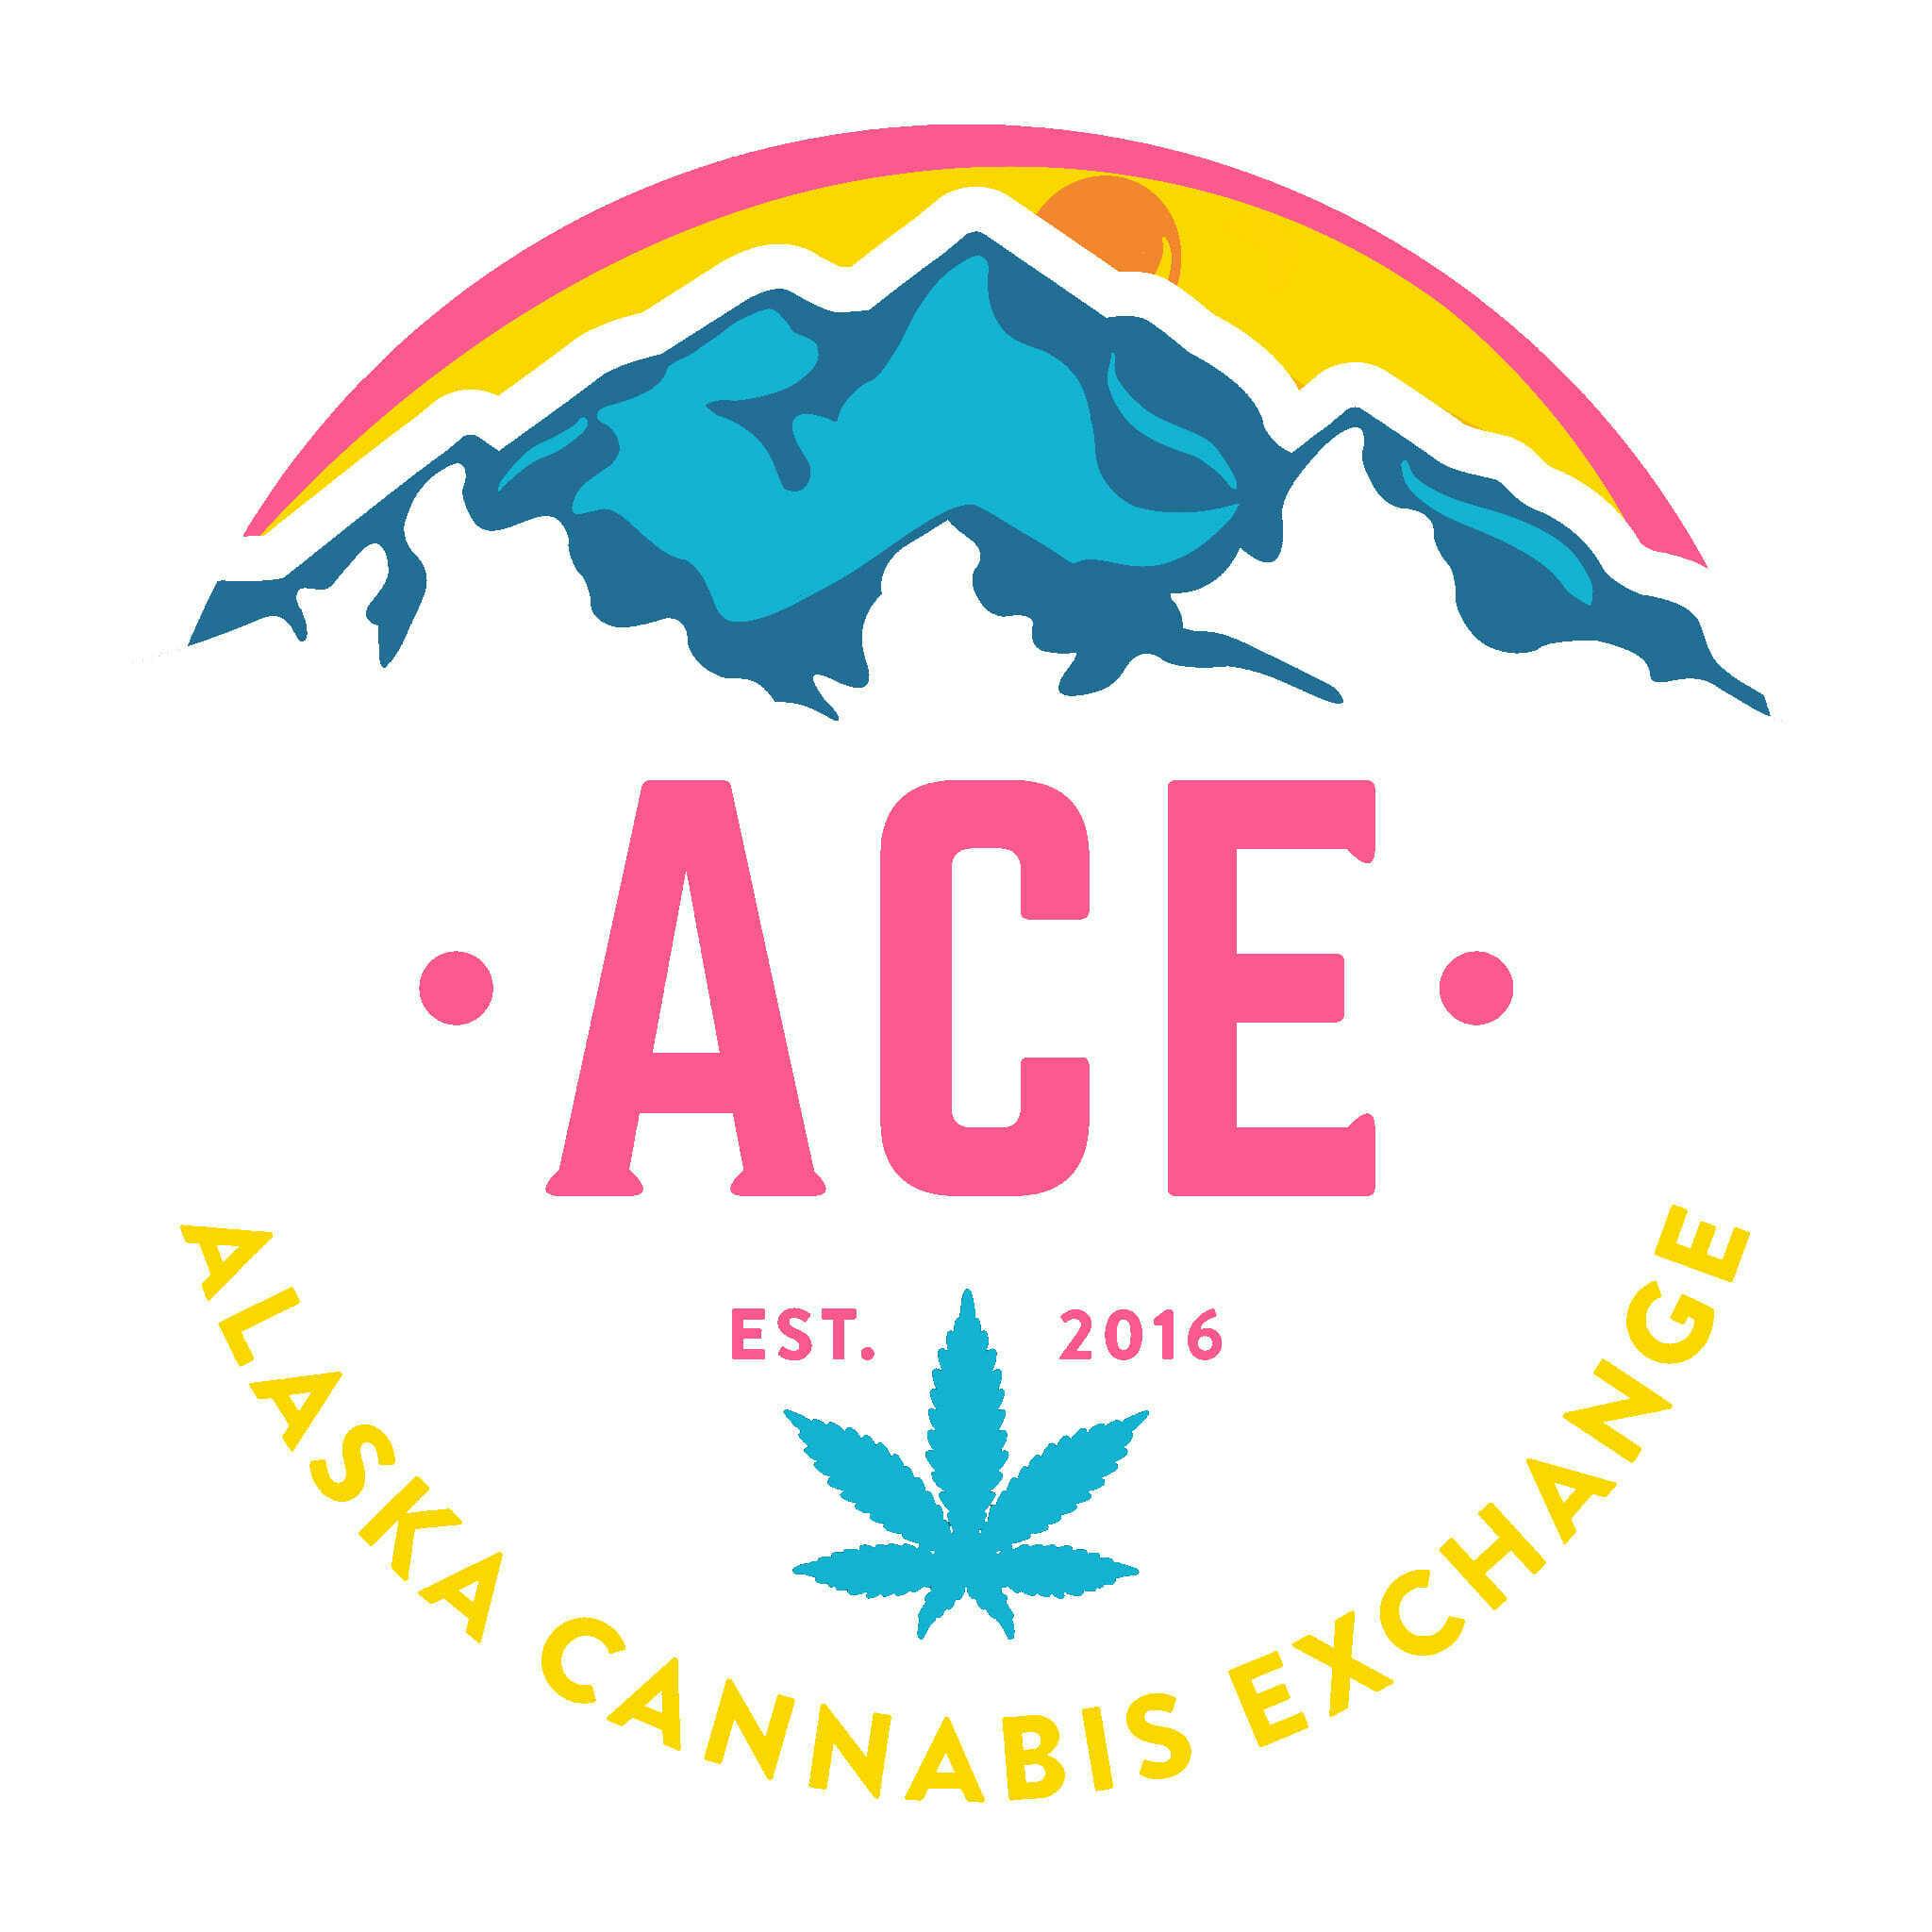 Alaska Cannabis Exchange logo